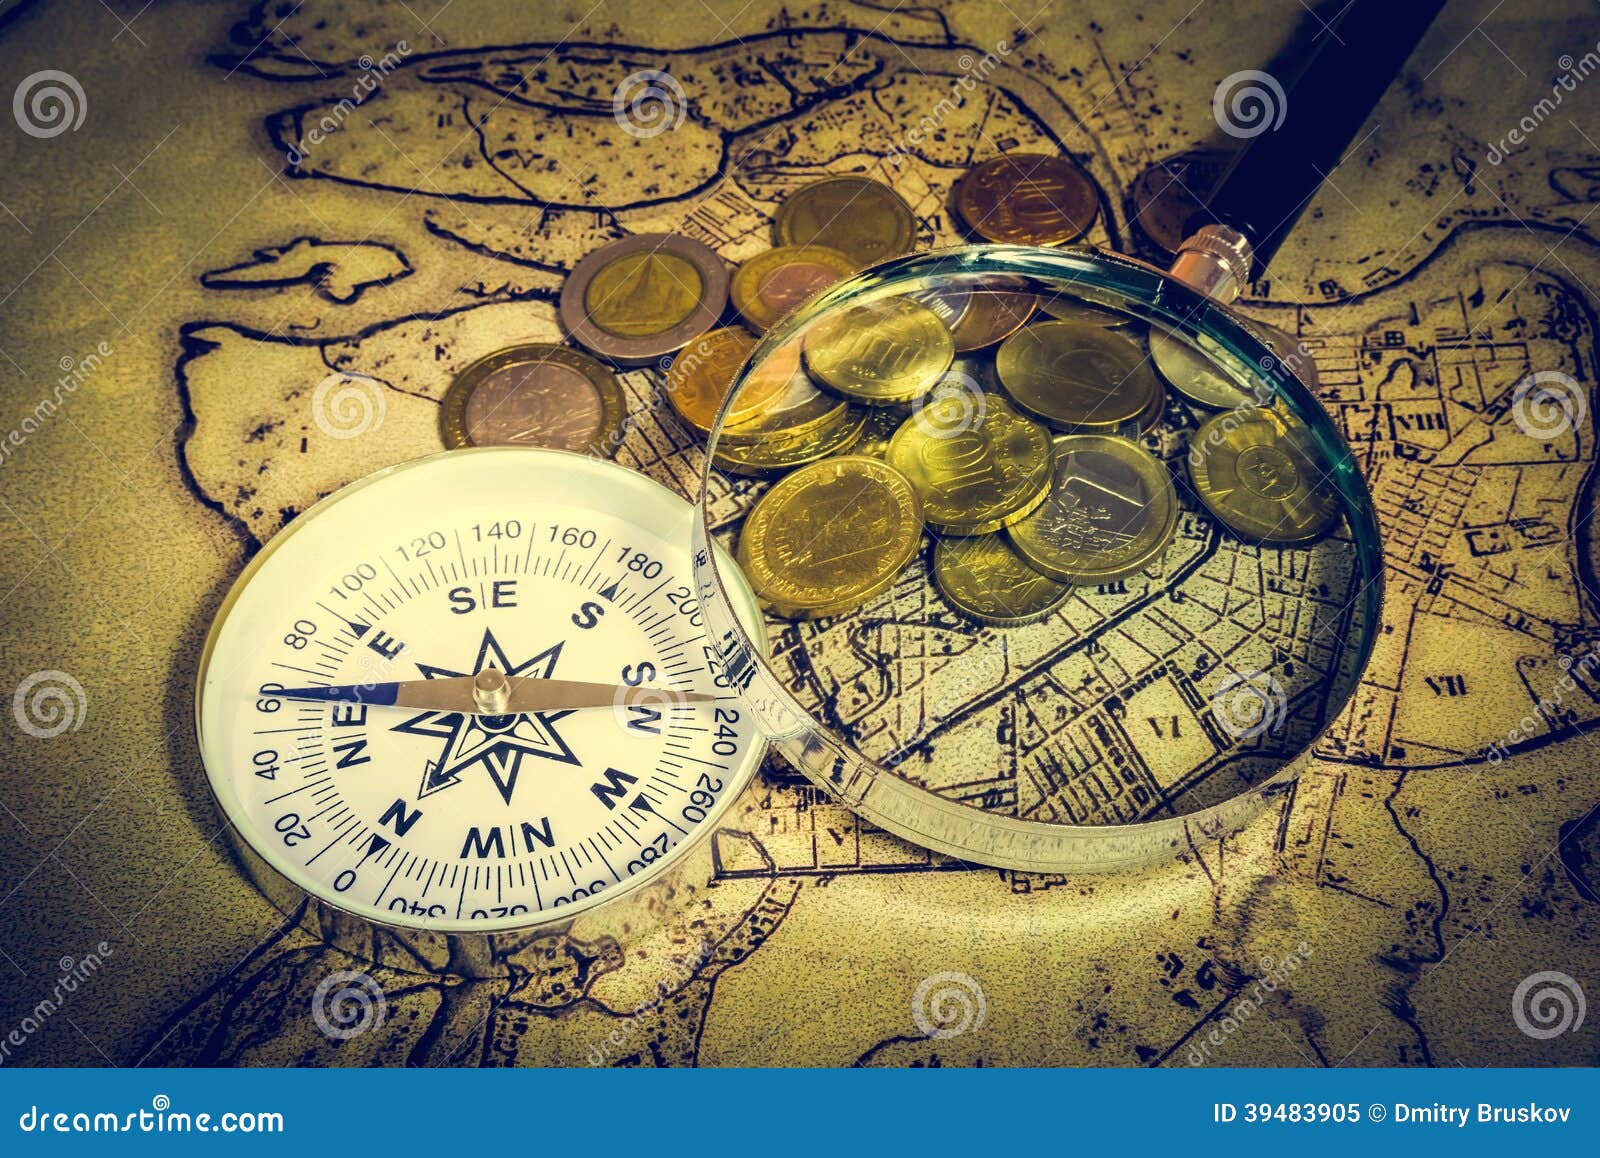 Включи компас на клад. Карты,компас, монеты. Карта компас клад. Старая карта с компасом монетами. Монета компас.